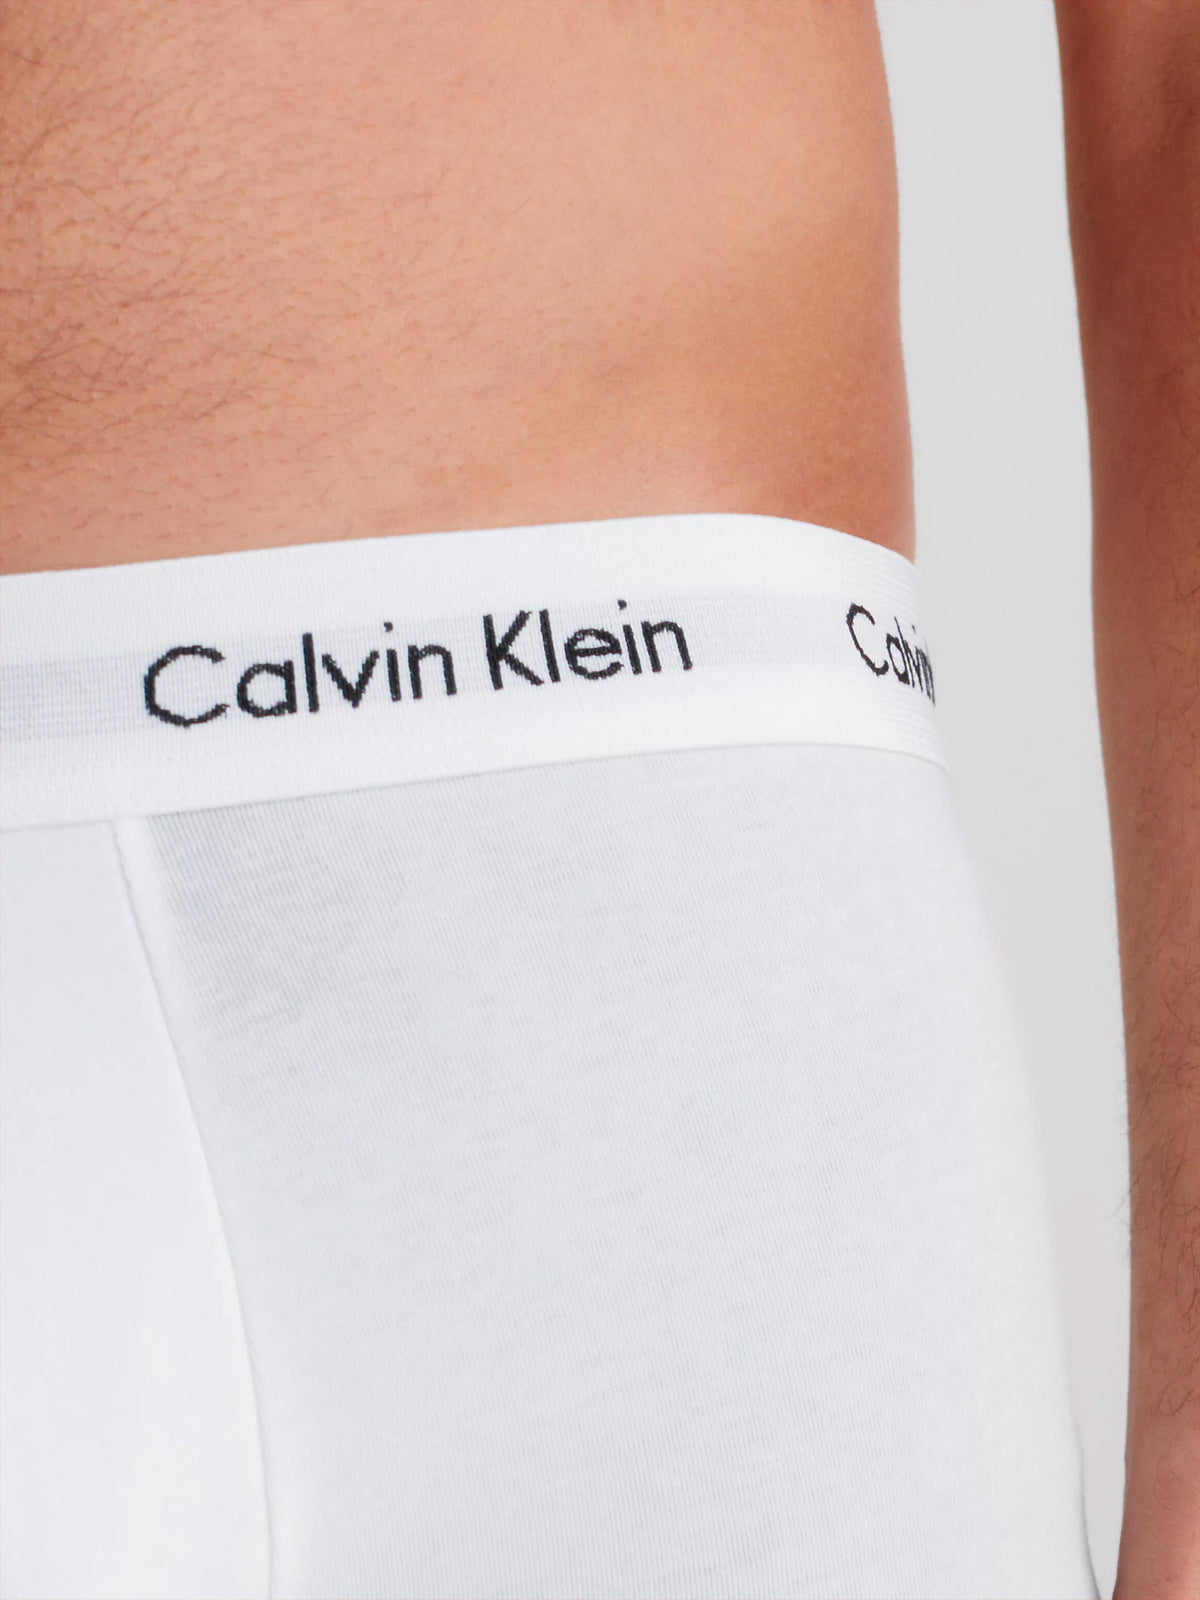 Mens Calvin Klein Boxer Shorts Low Rise Trunks 3 Pack, 04, U2664G, Gry Hthr, Wht, Plc Bl_Sbdd Ttl Prt